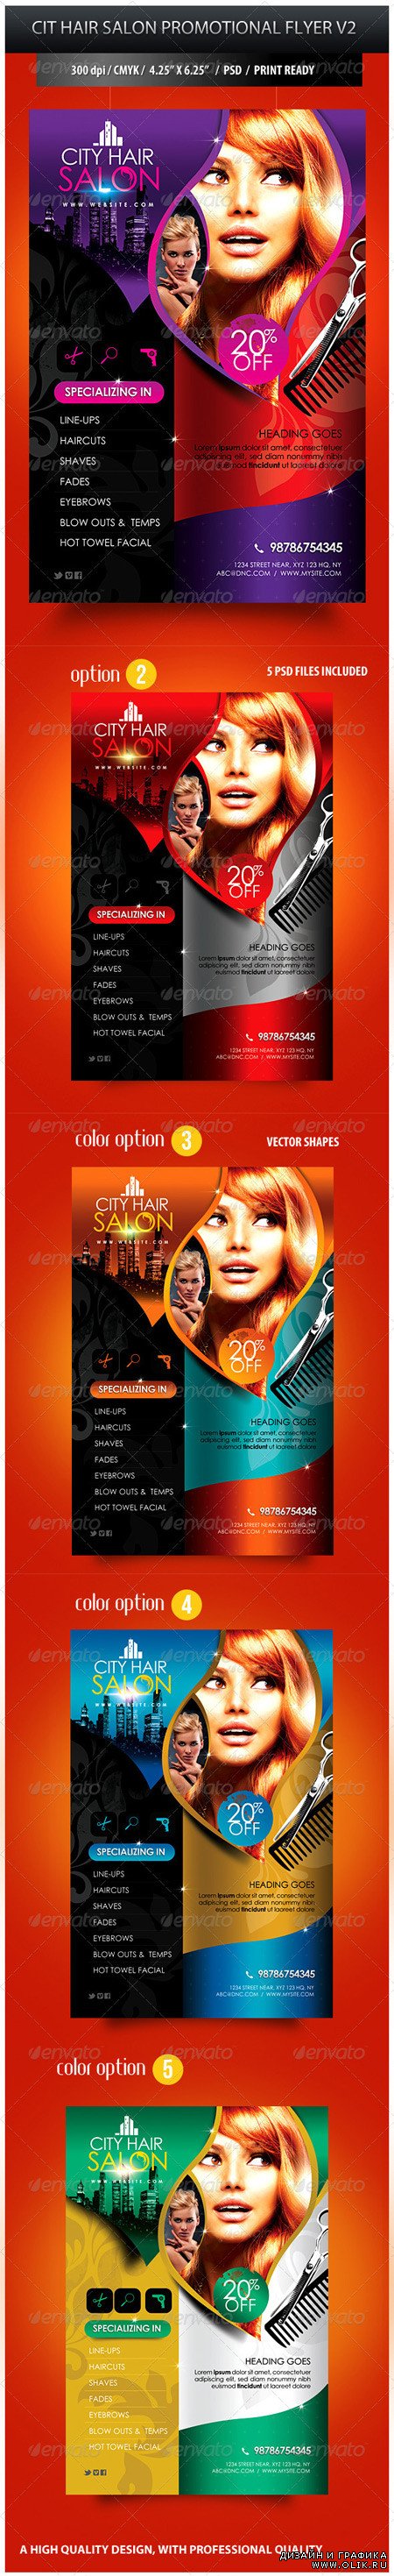 City Hair Salon Promotional Flyer V2